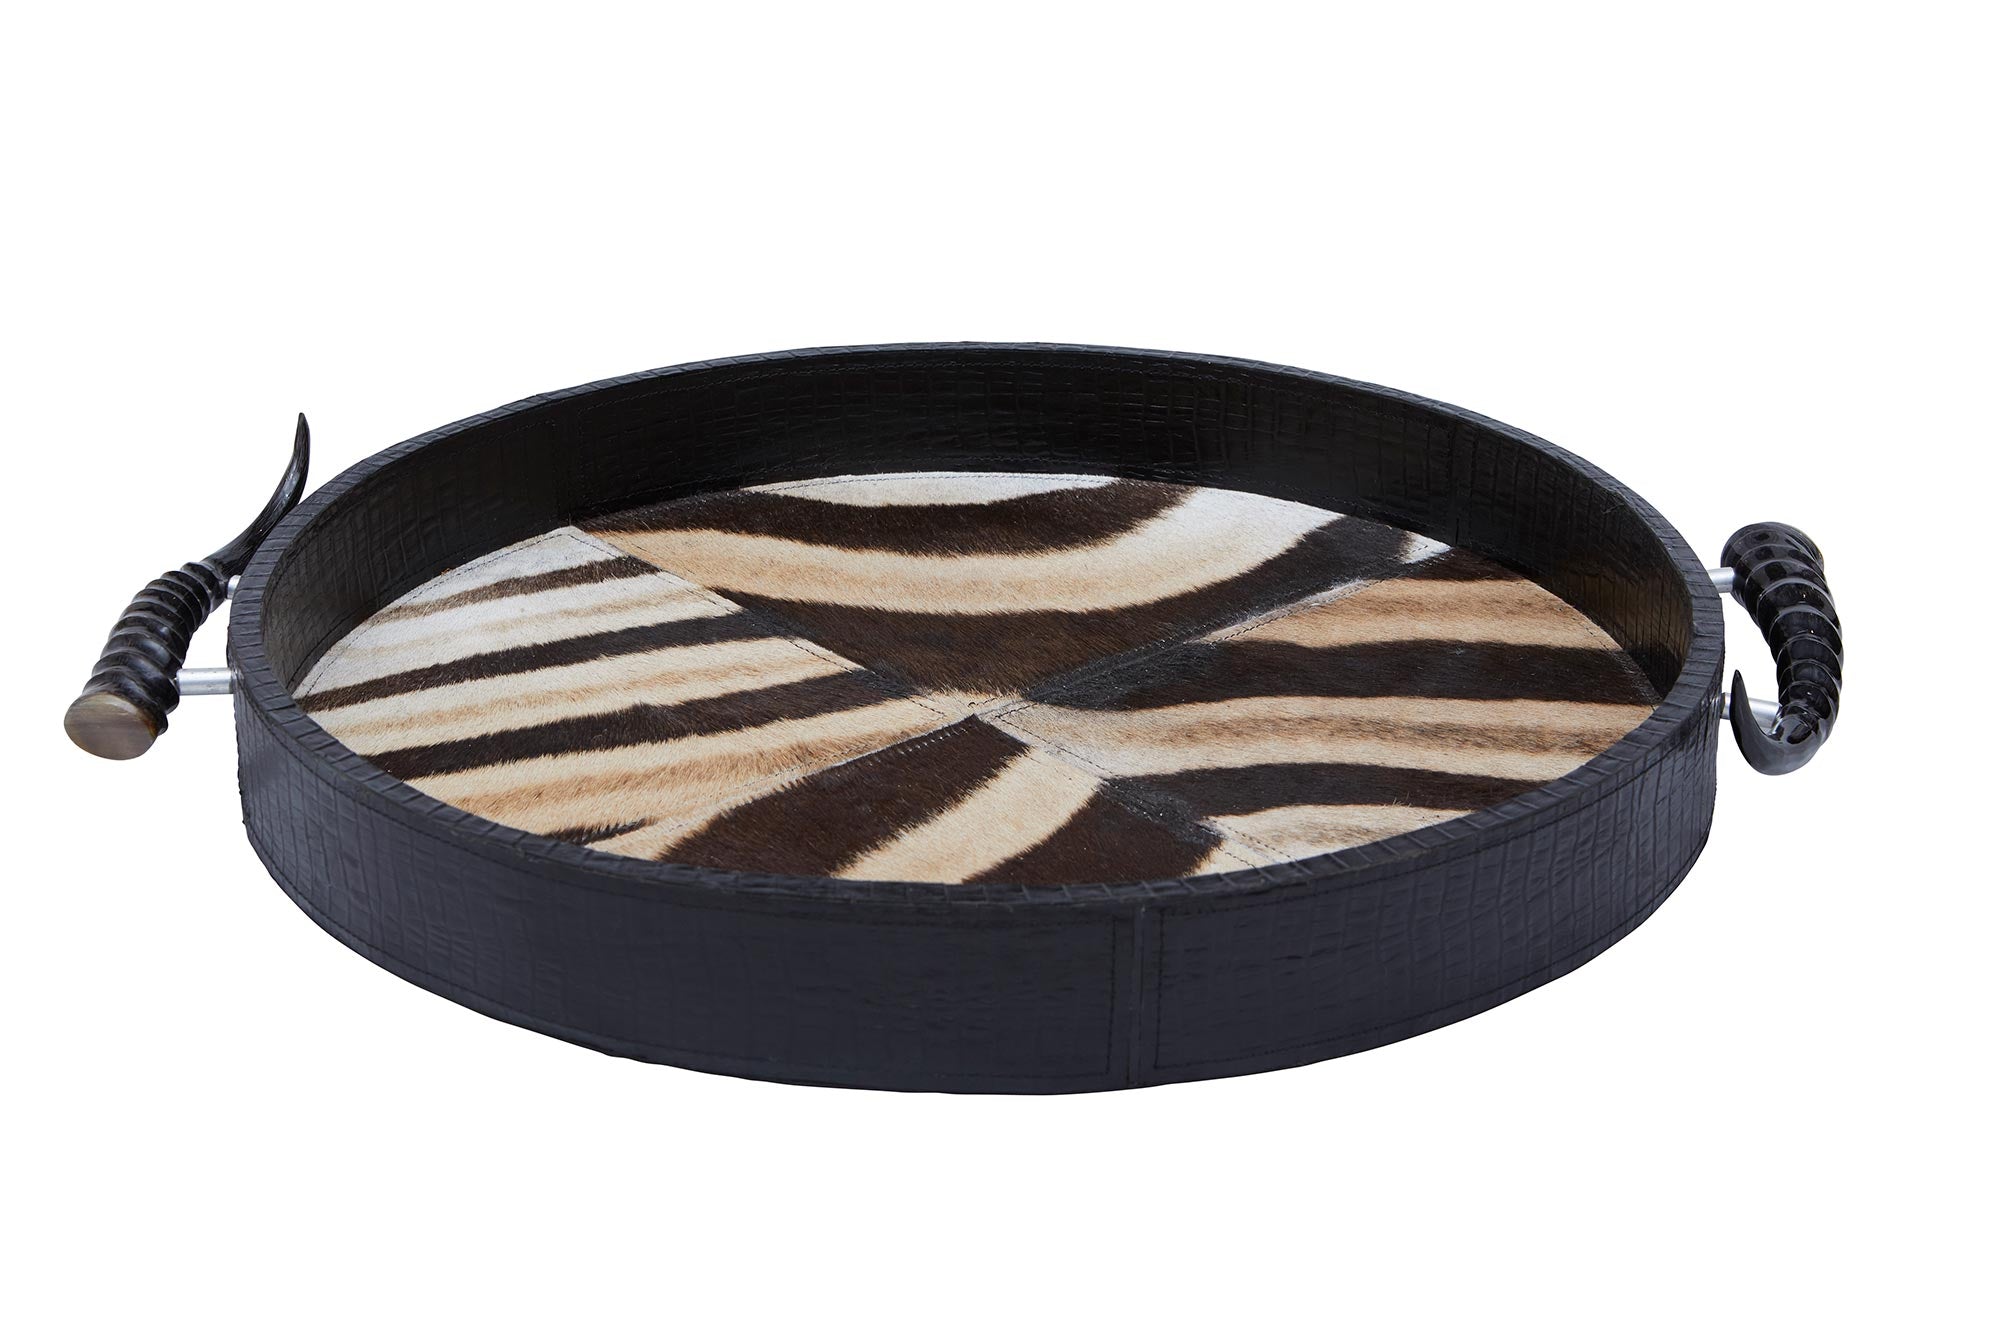 Leather Round Tray w/ Zebra Inlay / Springbok Horn Handles